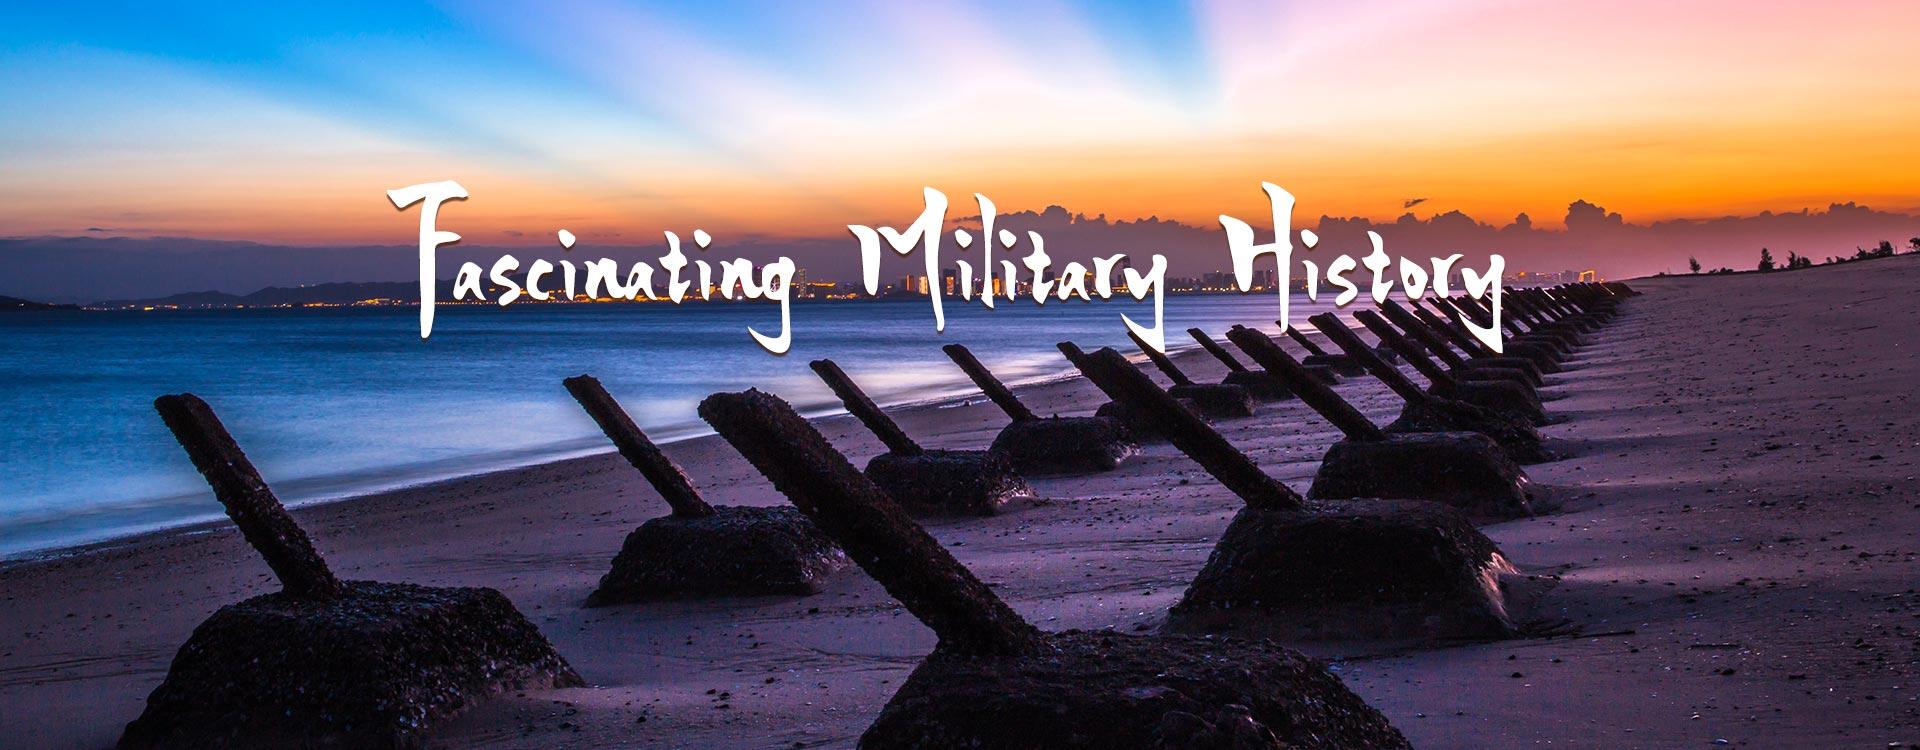 Fascinating Military History